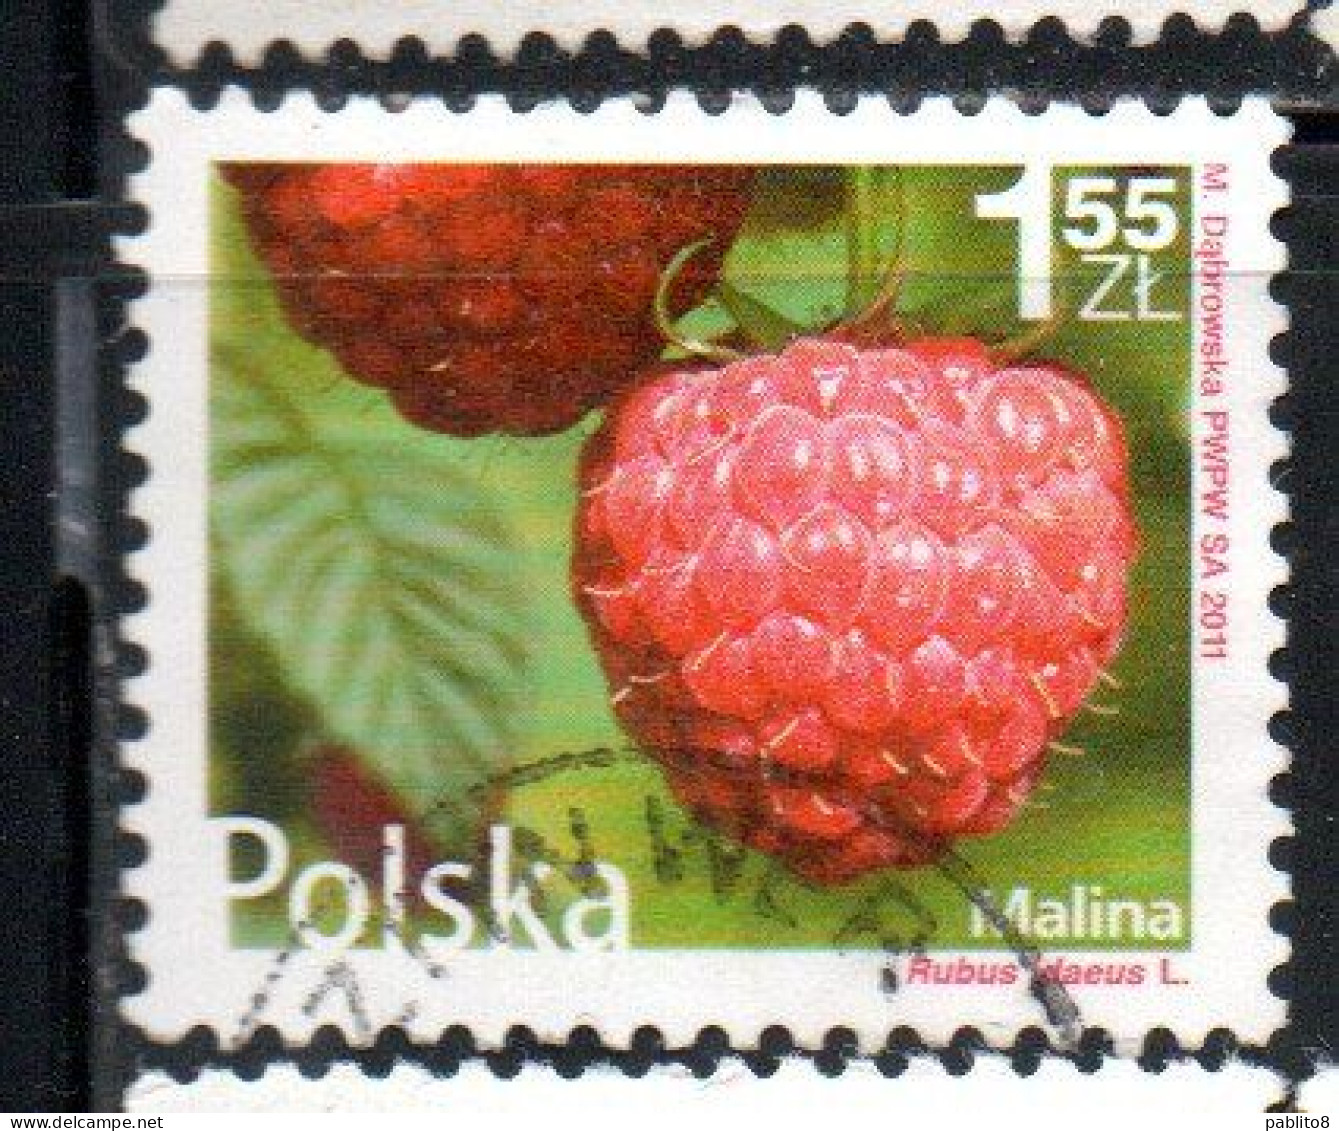 POLONIA POLAND POLSKA 2011 FRUIT AND FLOWERS RUBUS IDAEUS 1.55z USED USATO OBLITERE' - Gebraucht